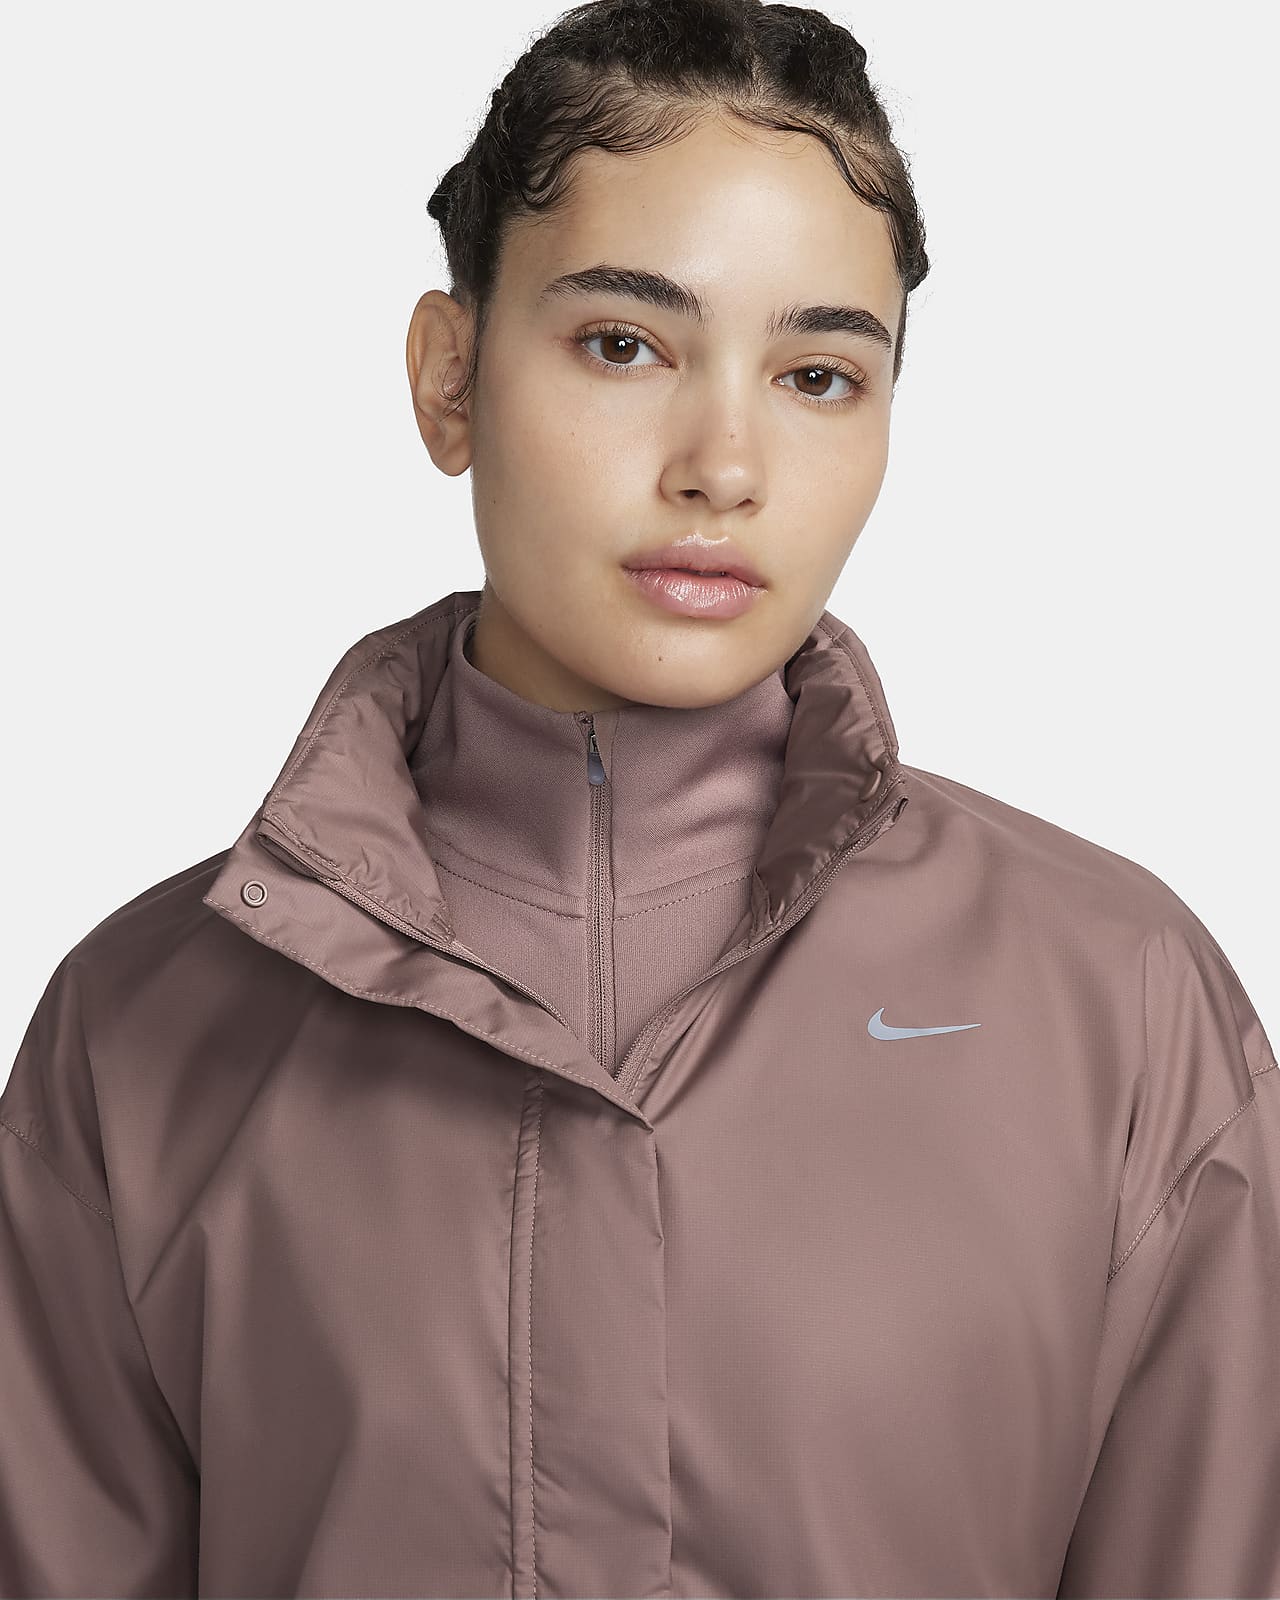 Nike Fast Running NL Jacket. Repel Women\'s Nike